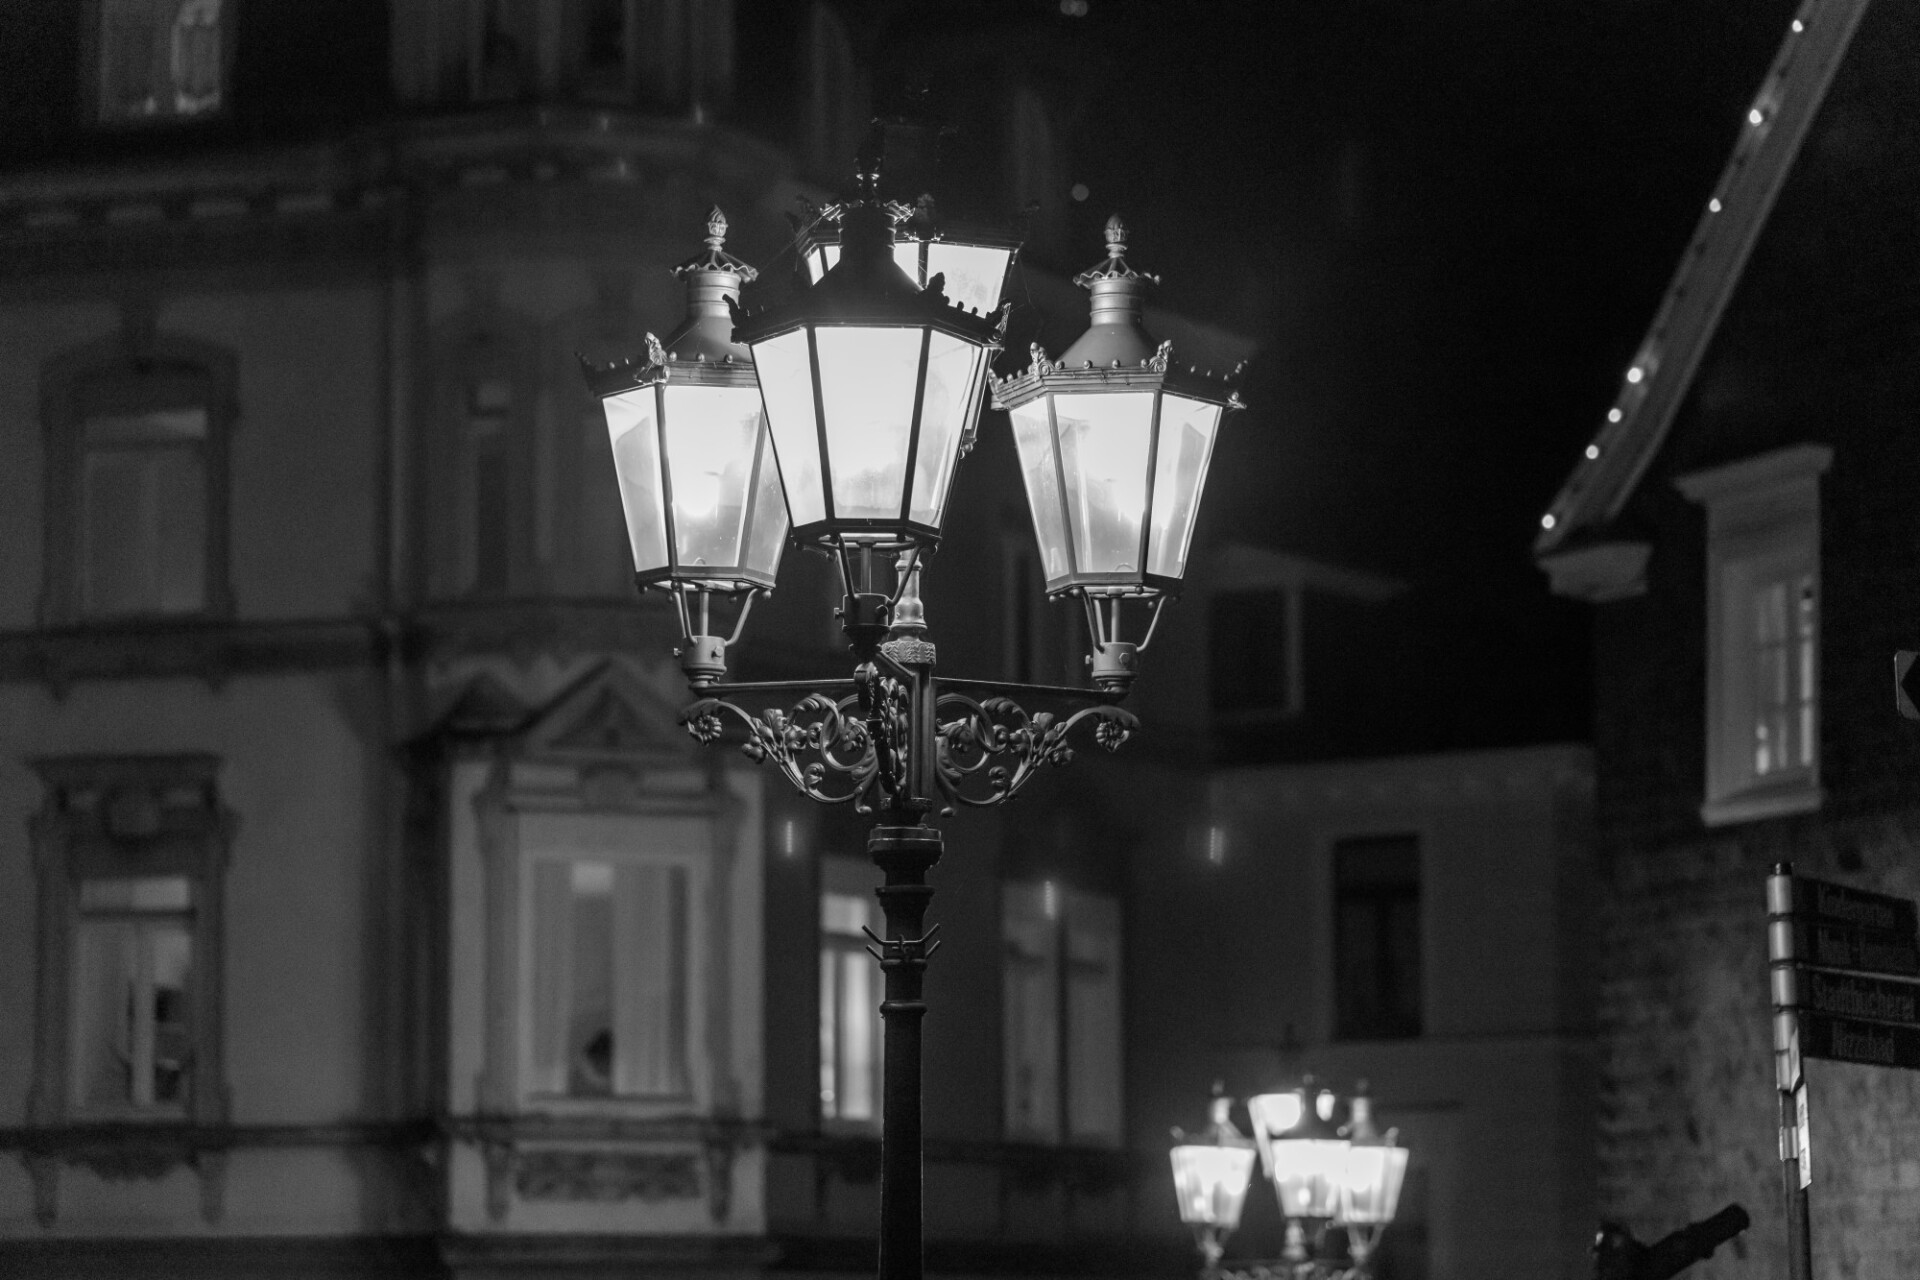 Old street lamp